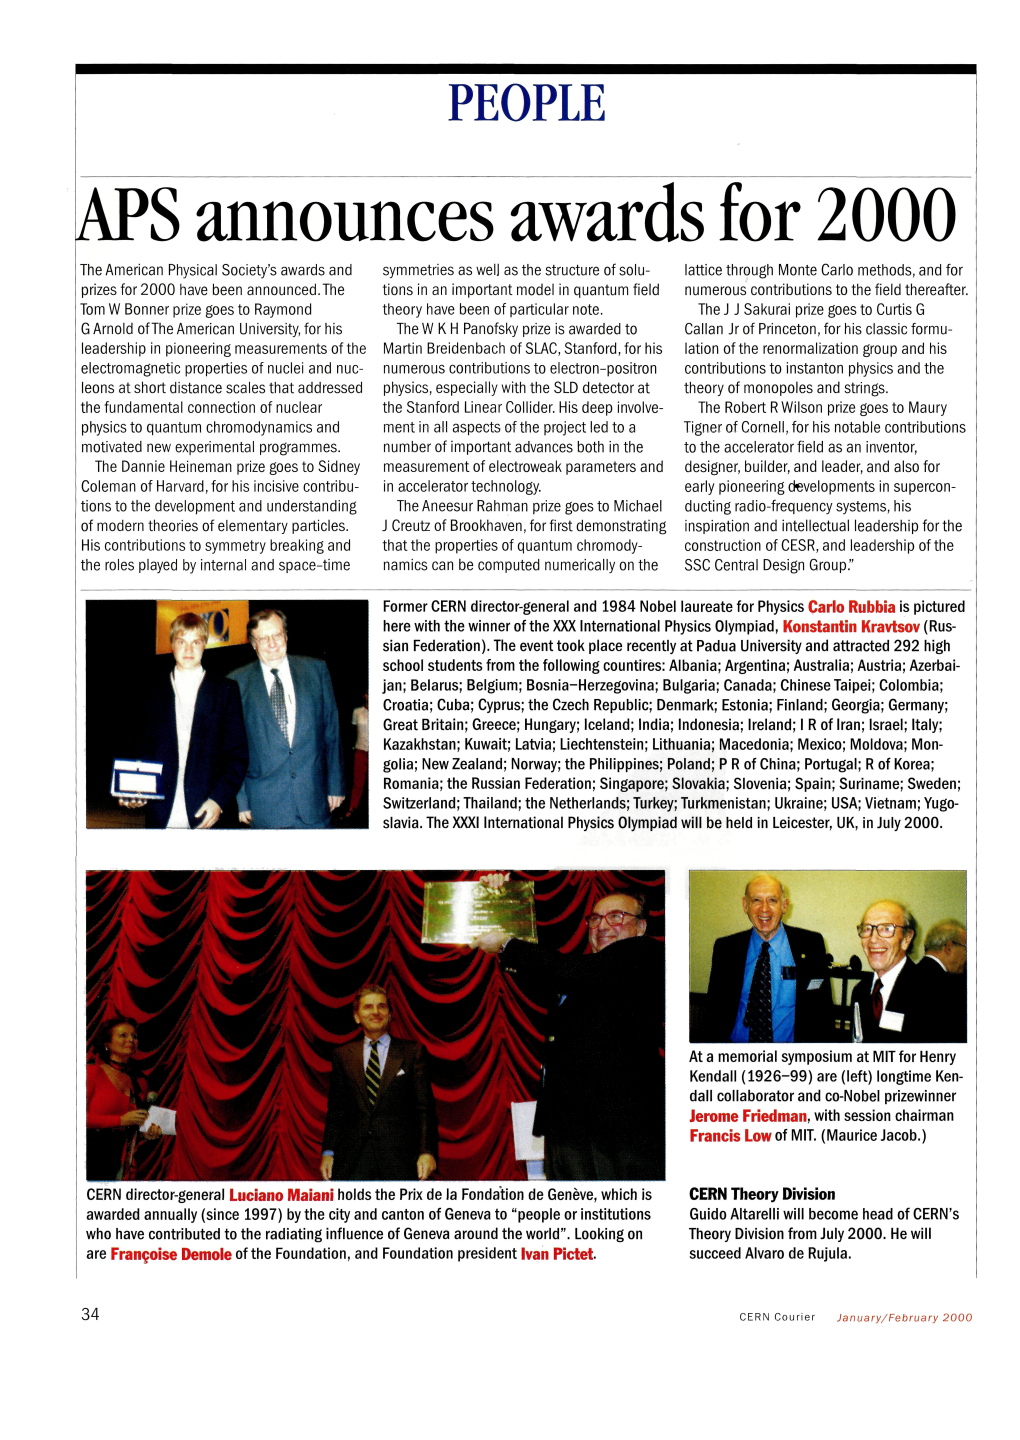 Kps Announces Awards for 2000